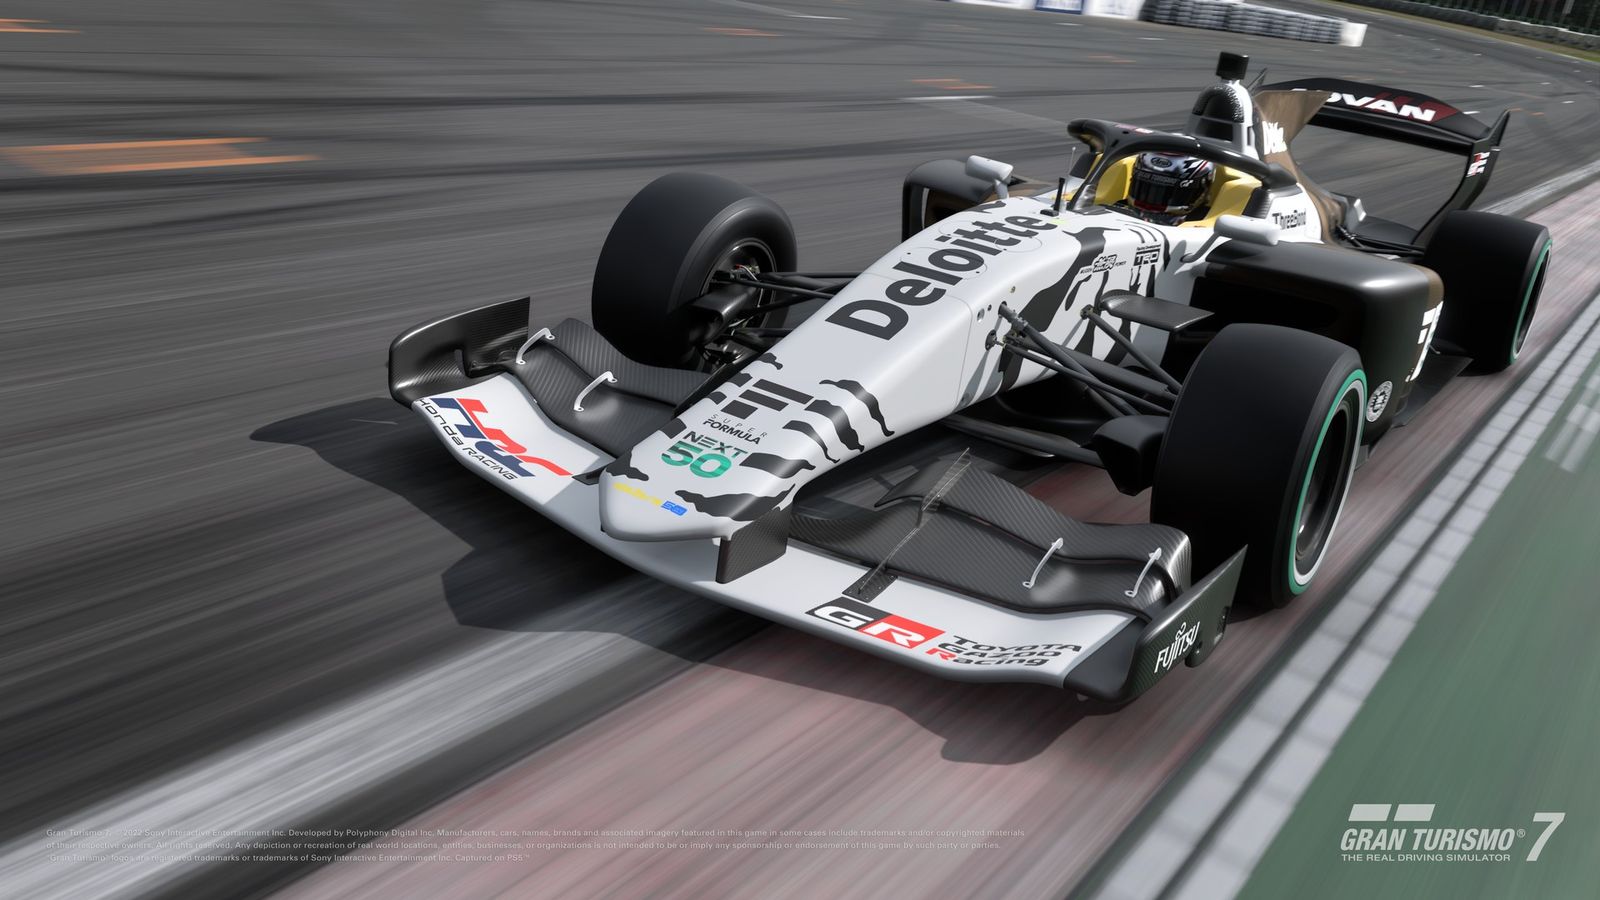 The new Super Formula car in Gran Turismo 7, added in the April 2023 update